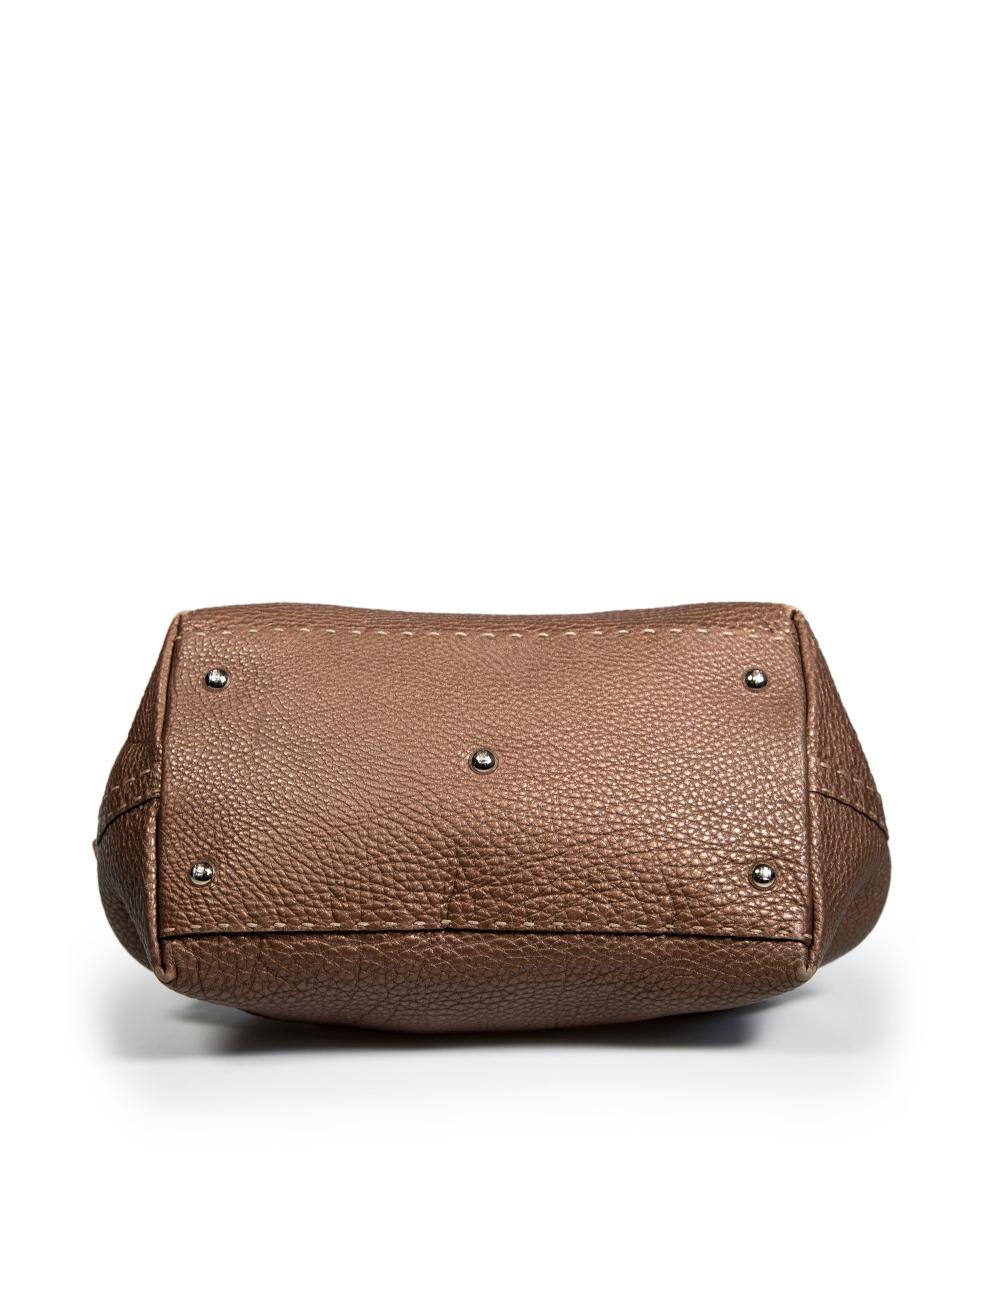 Women's Fendi Vintage Brown Leather Handbag For Sale